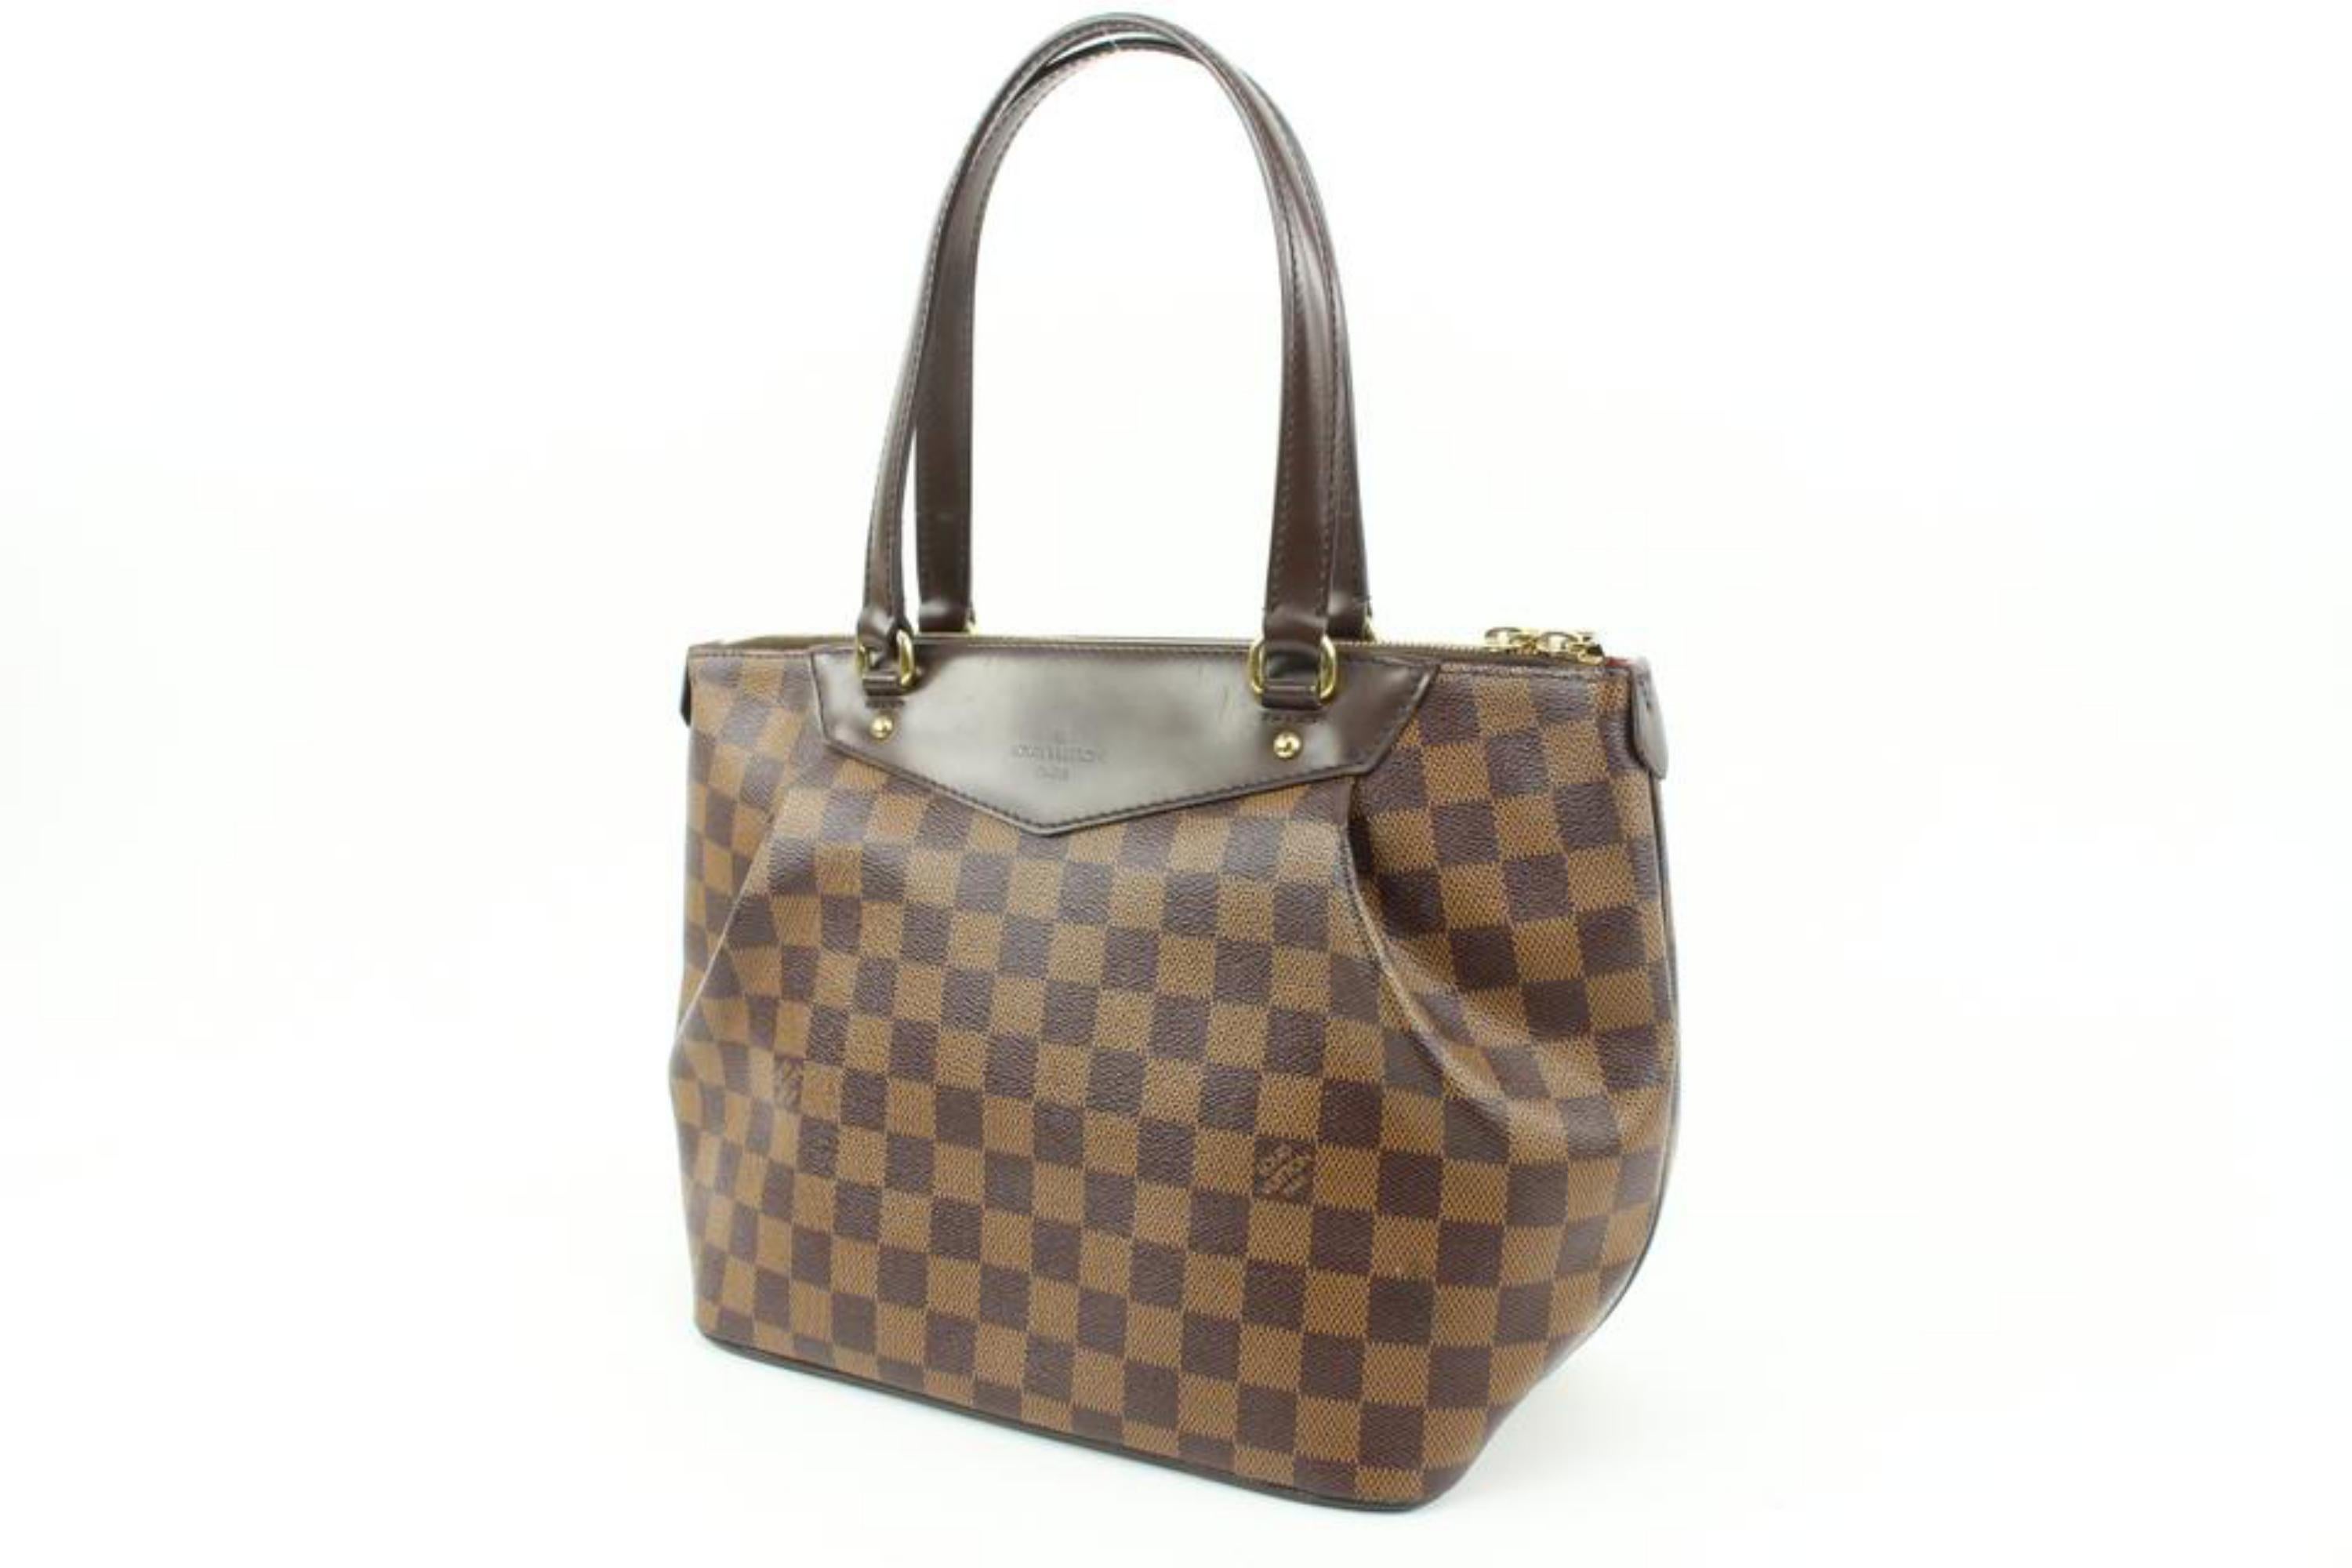 Authentic Louis Vuitton Westminster Damier PM Handbag - Pre-owned